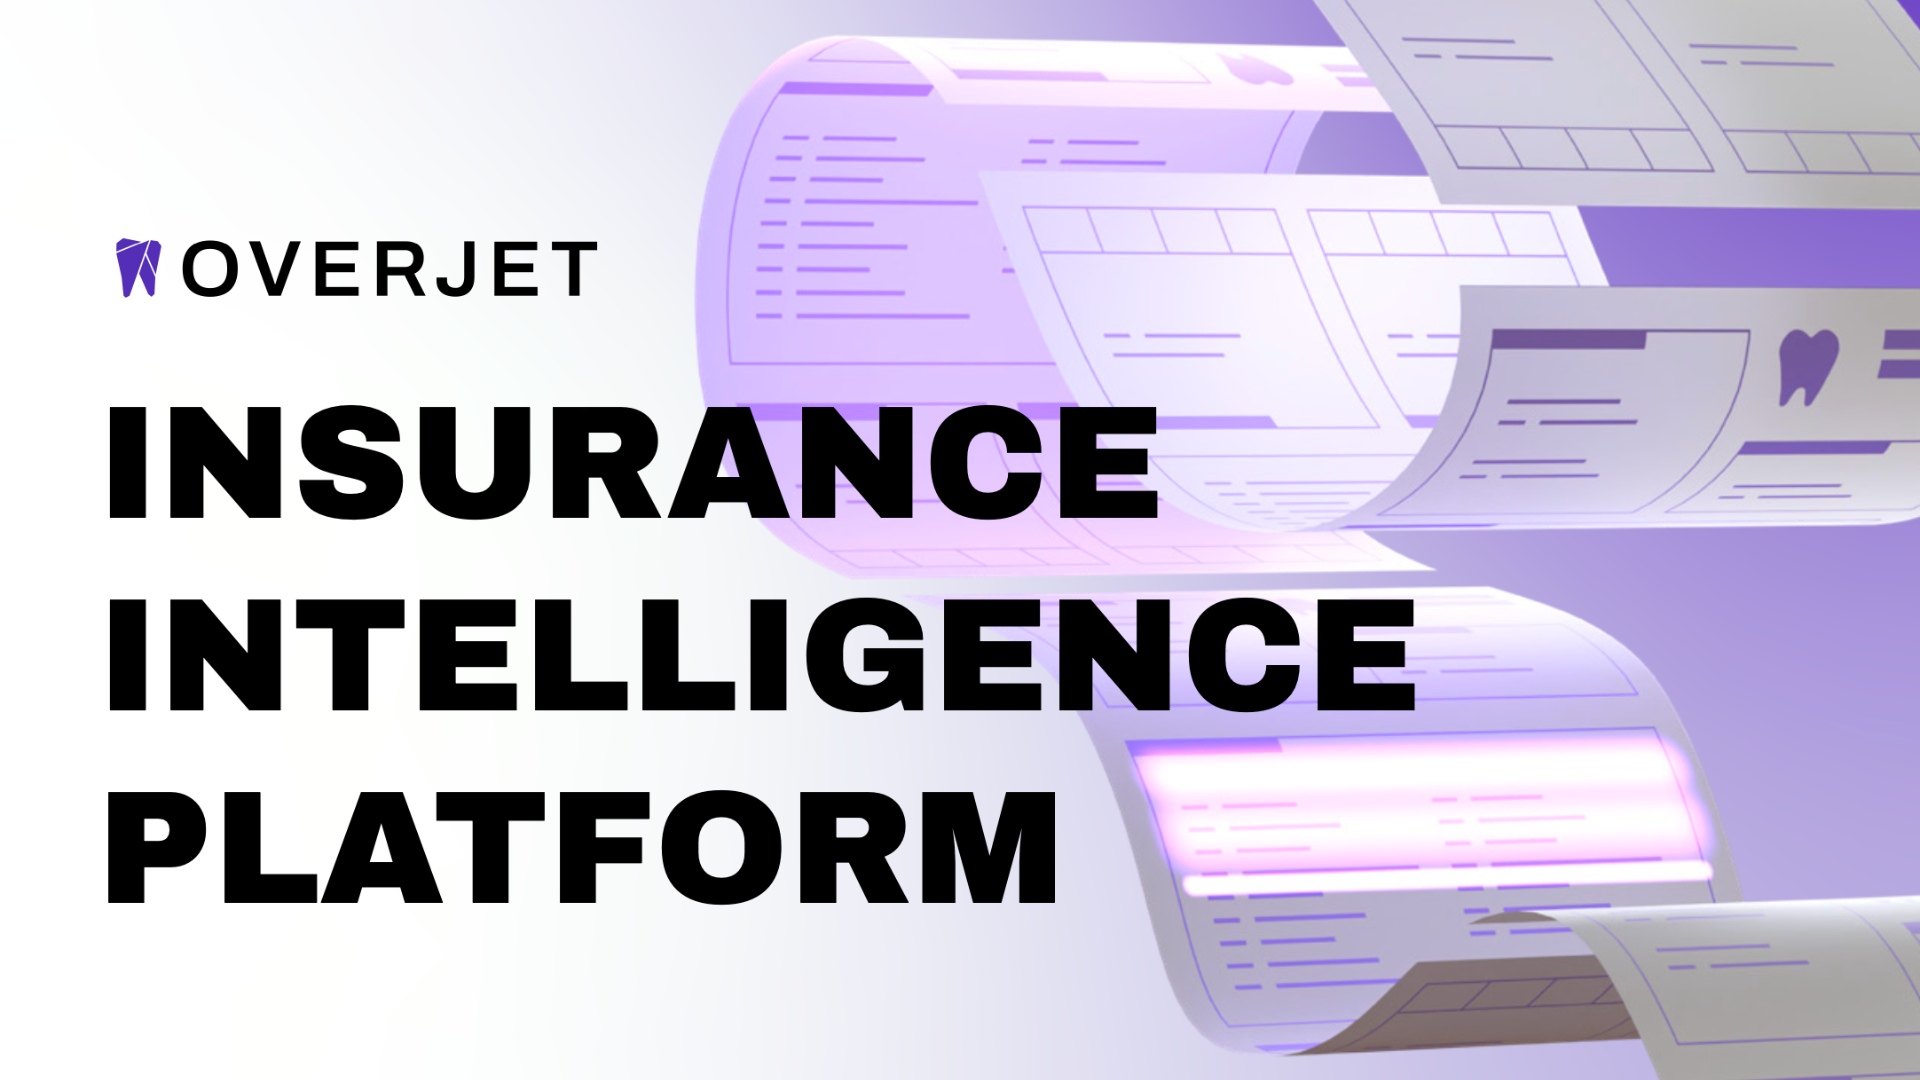 The Overjet Insurance Intelligence Platform